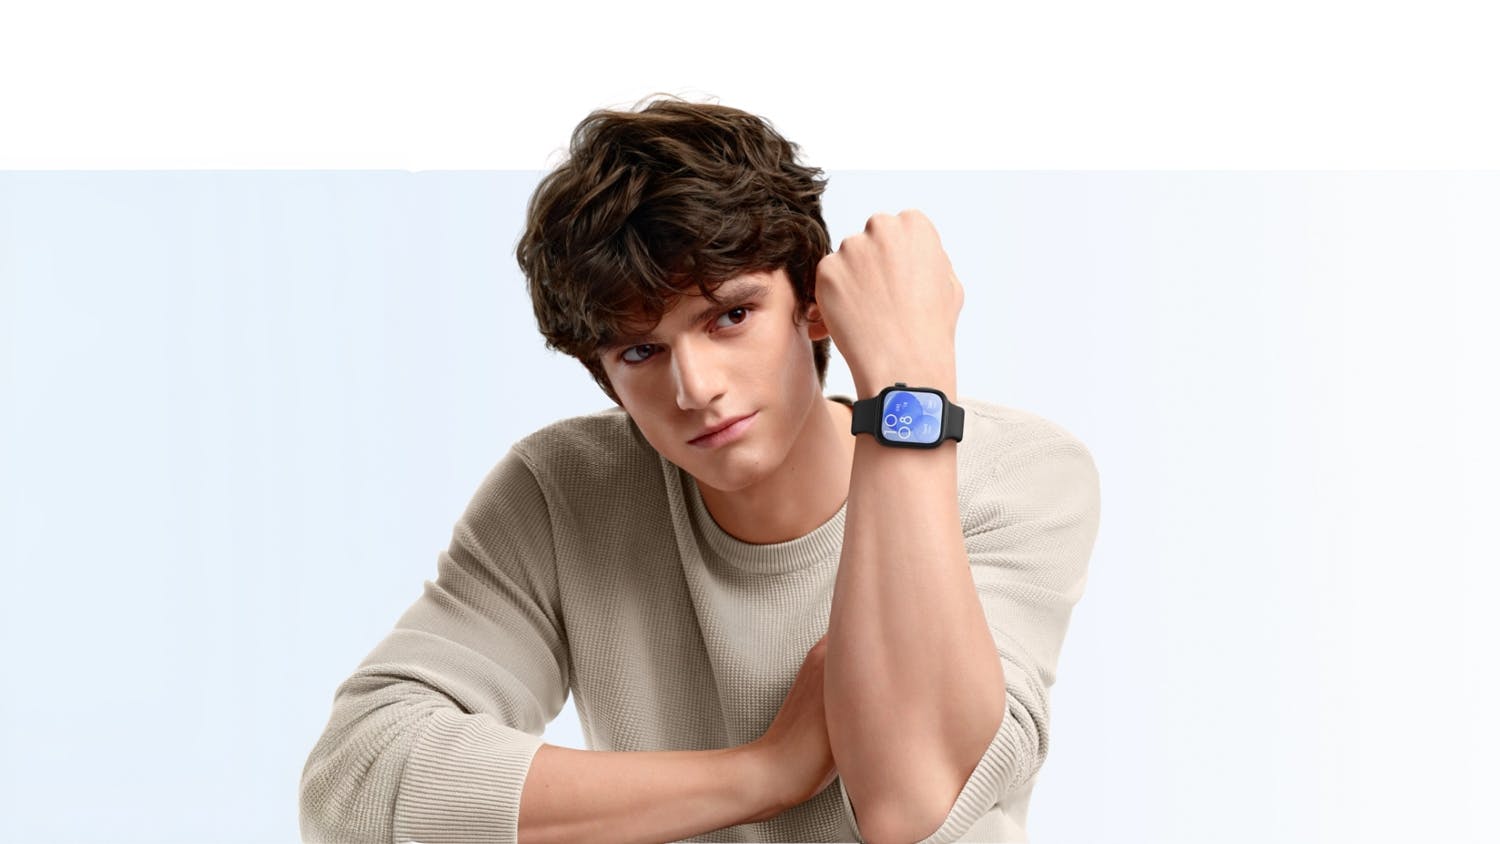 Huawei Watch Fit 3 Smartwatch - Aluminum Alloy Case with Black Fluoroelastomer Strap (GPS, Bluetooth)